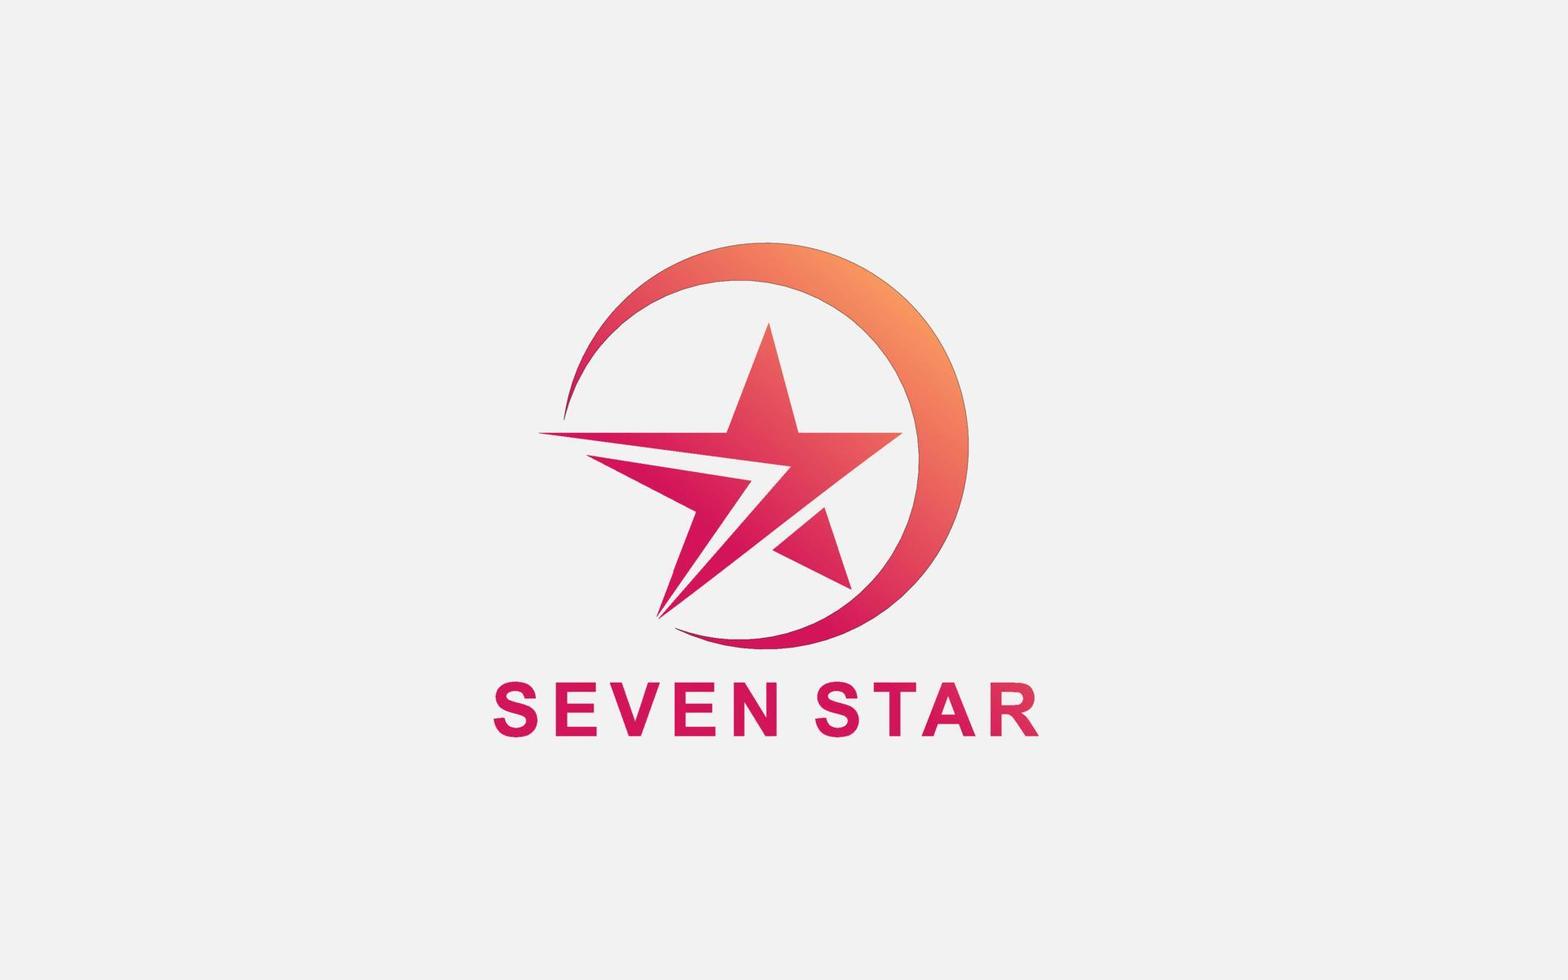 Seven Star logo designs template, Elegant Star logo designs vector